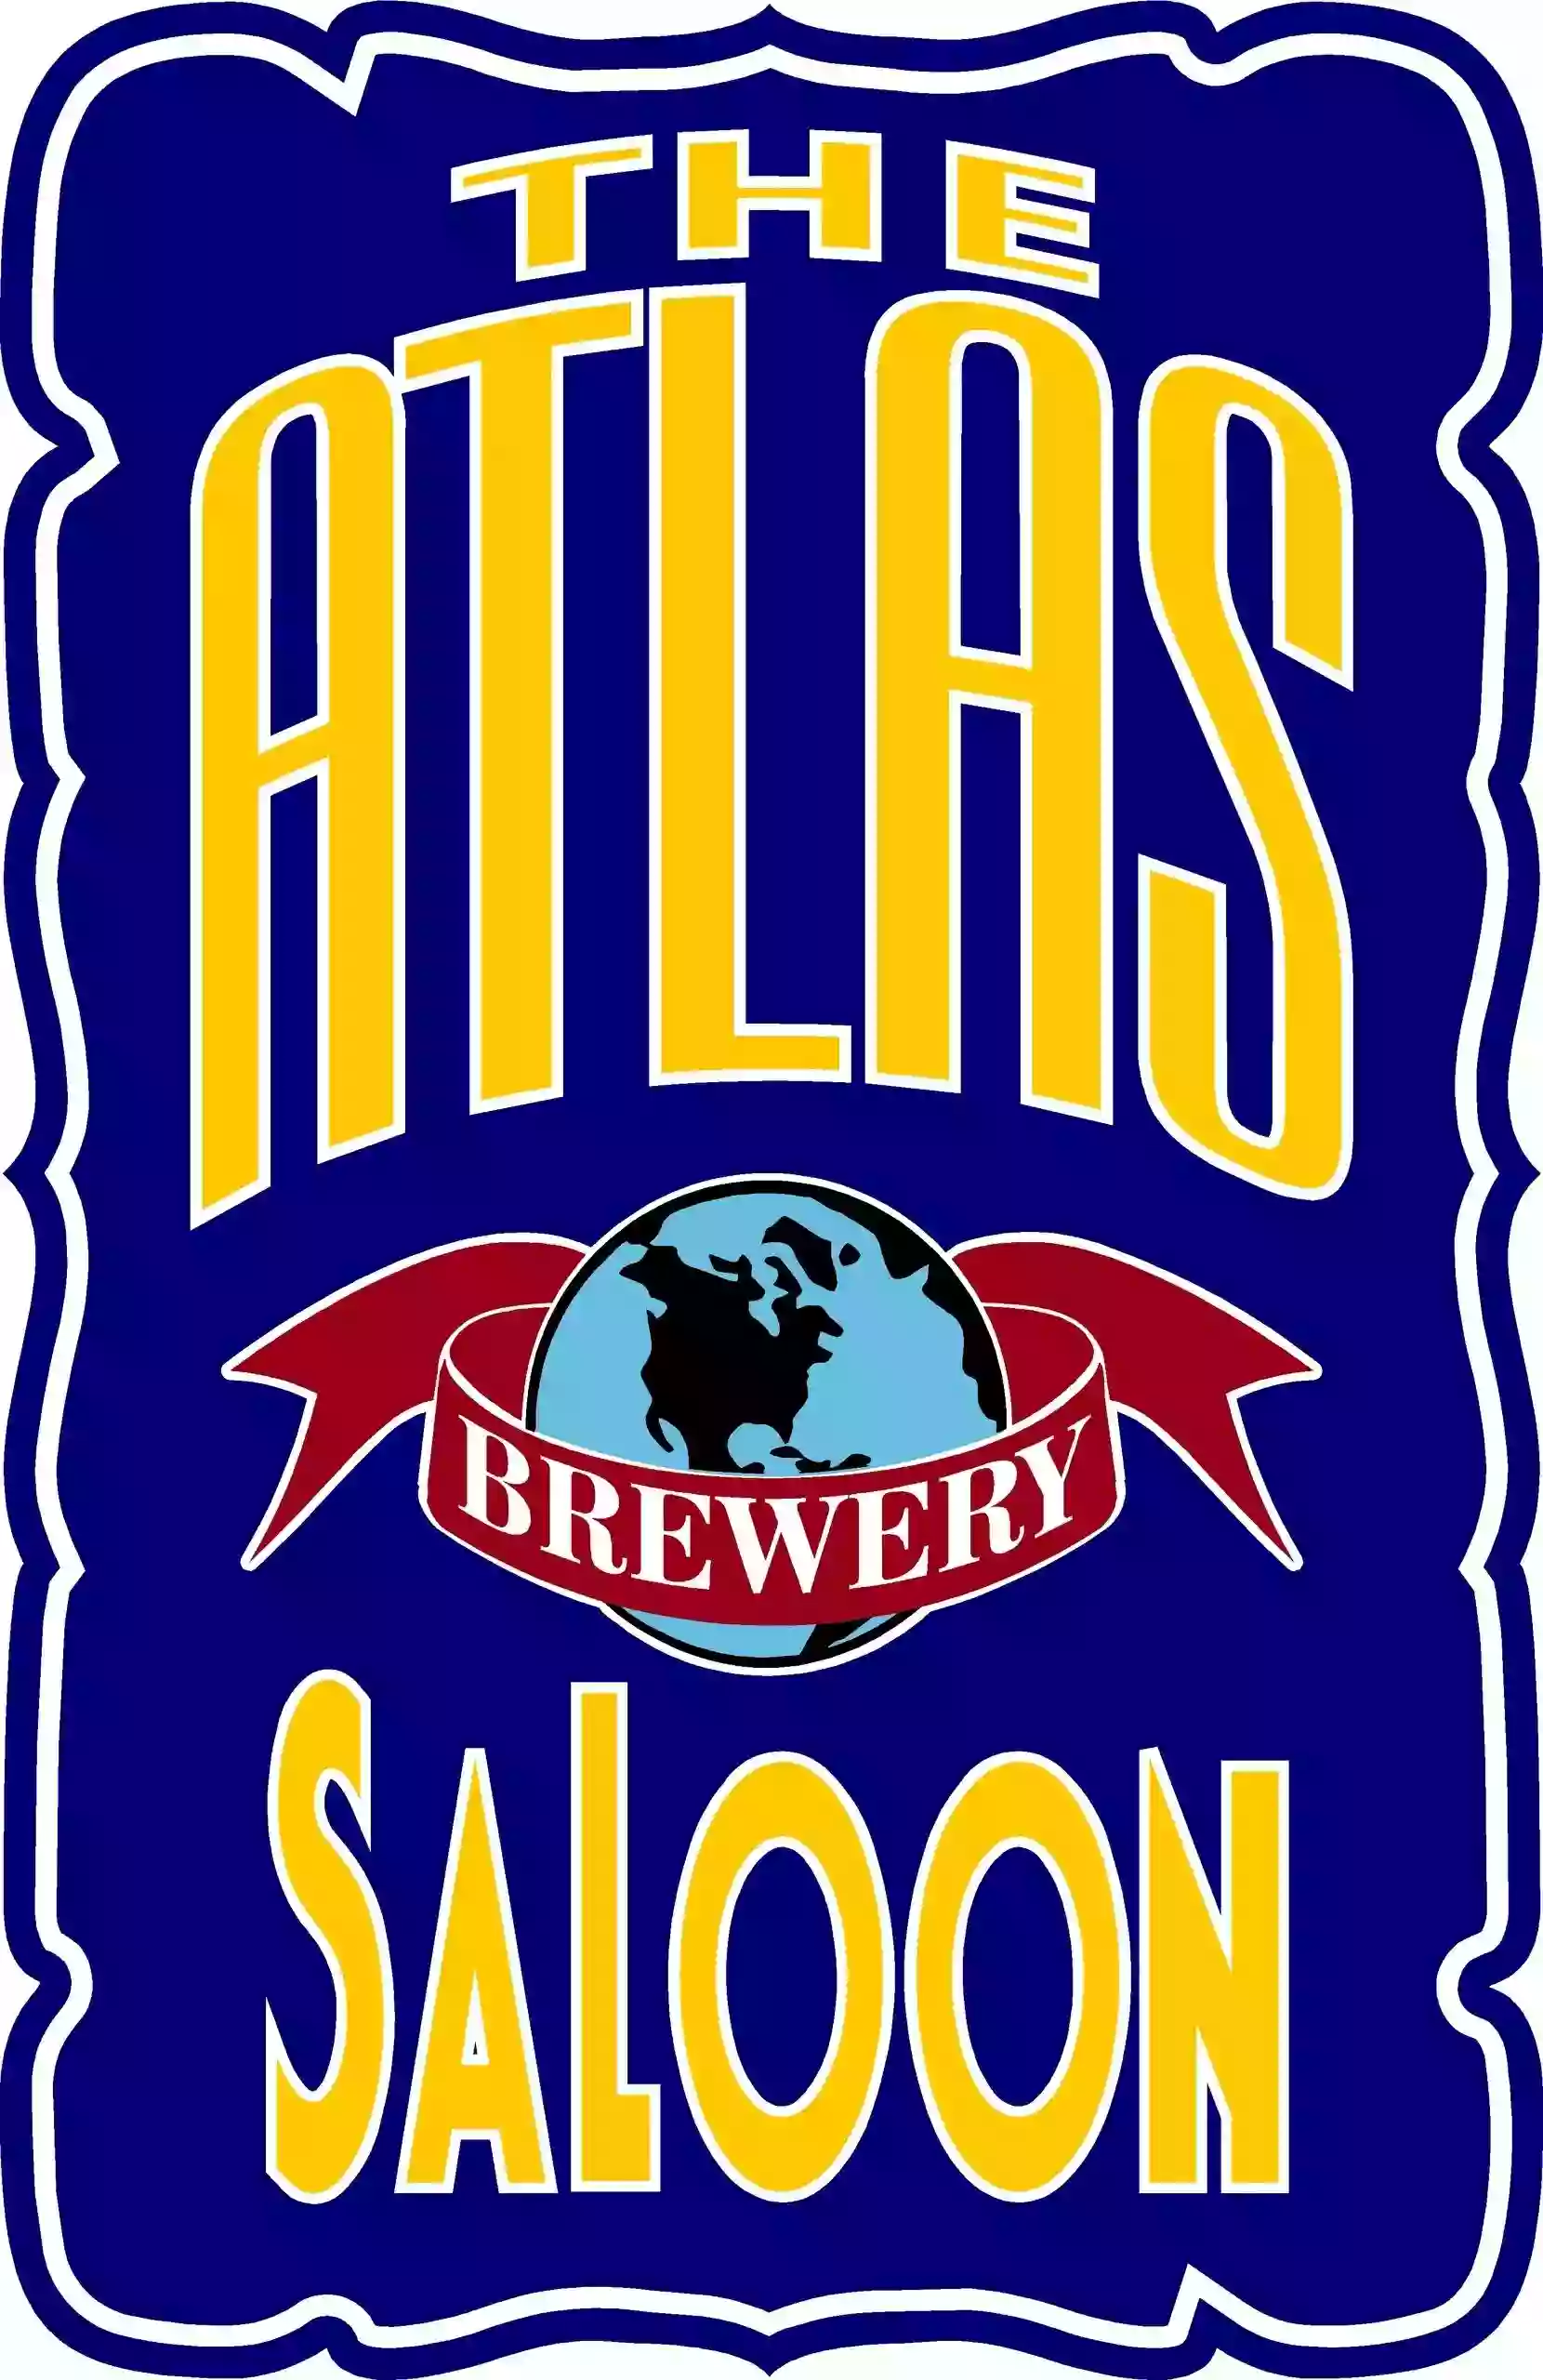 Atlas Saloon